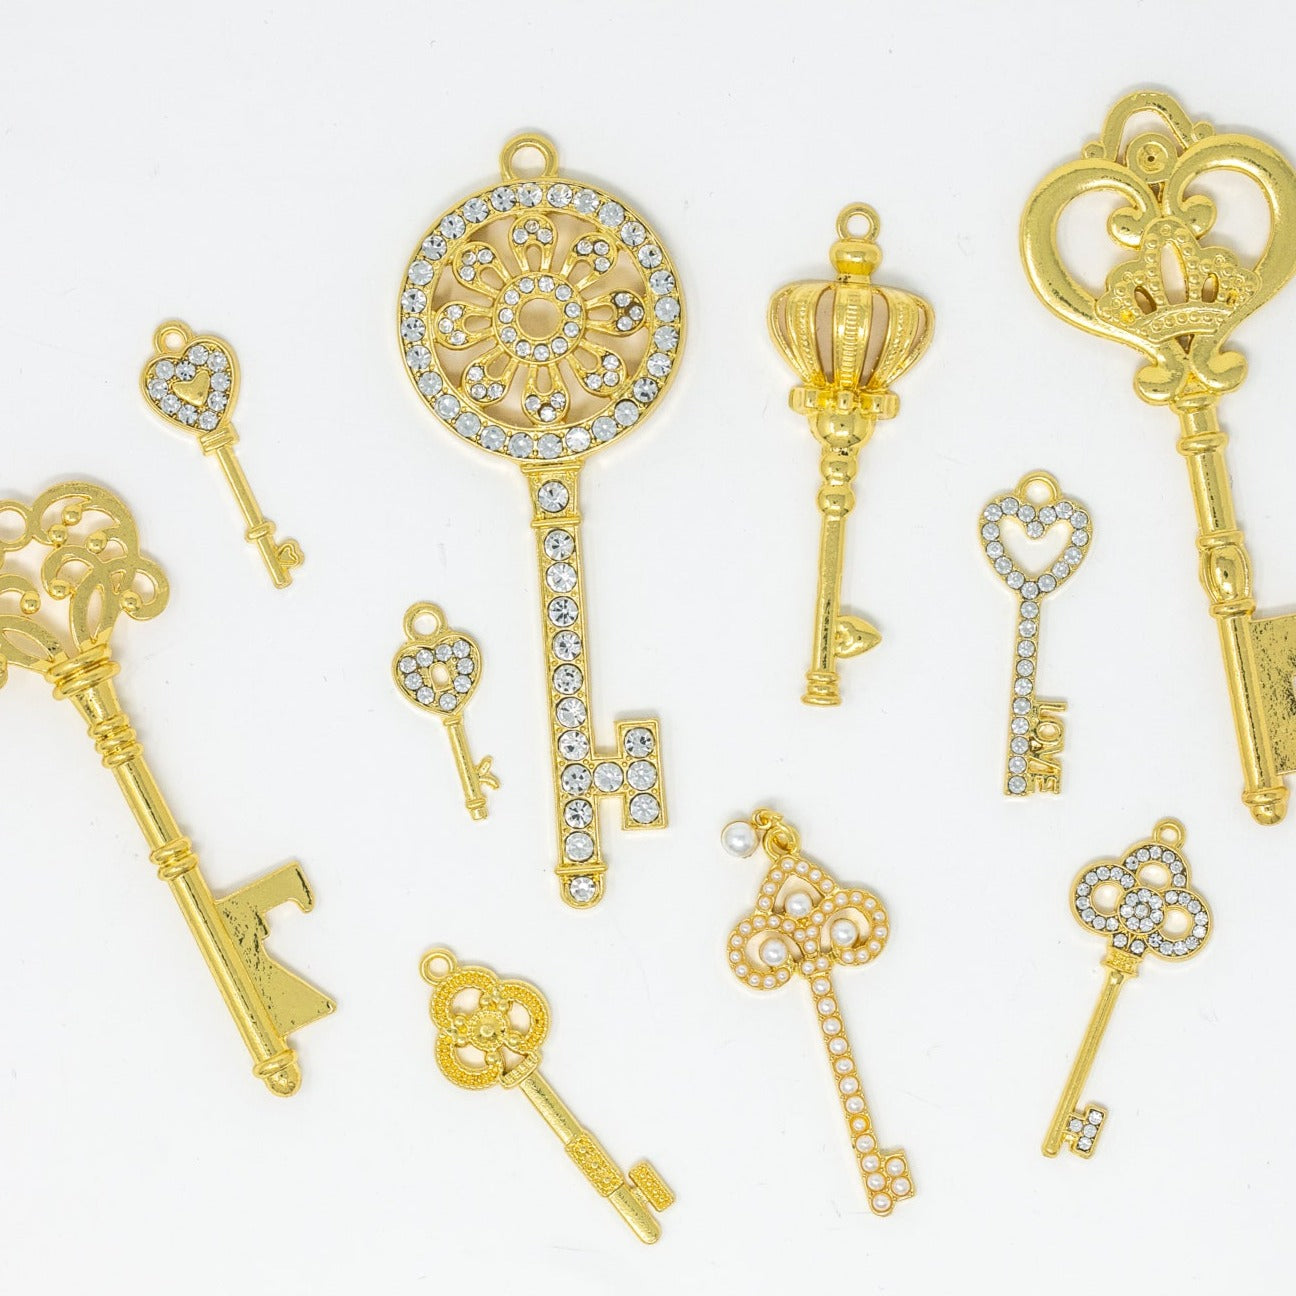 gold vintage key embellishments for crafts weddings and decor DIYs